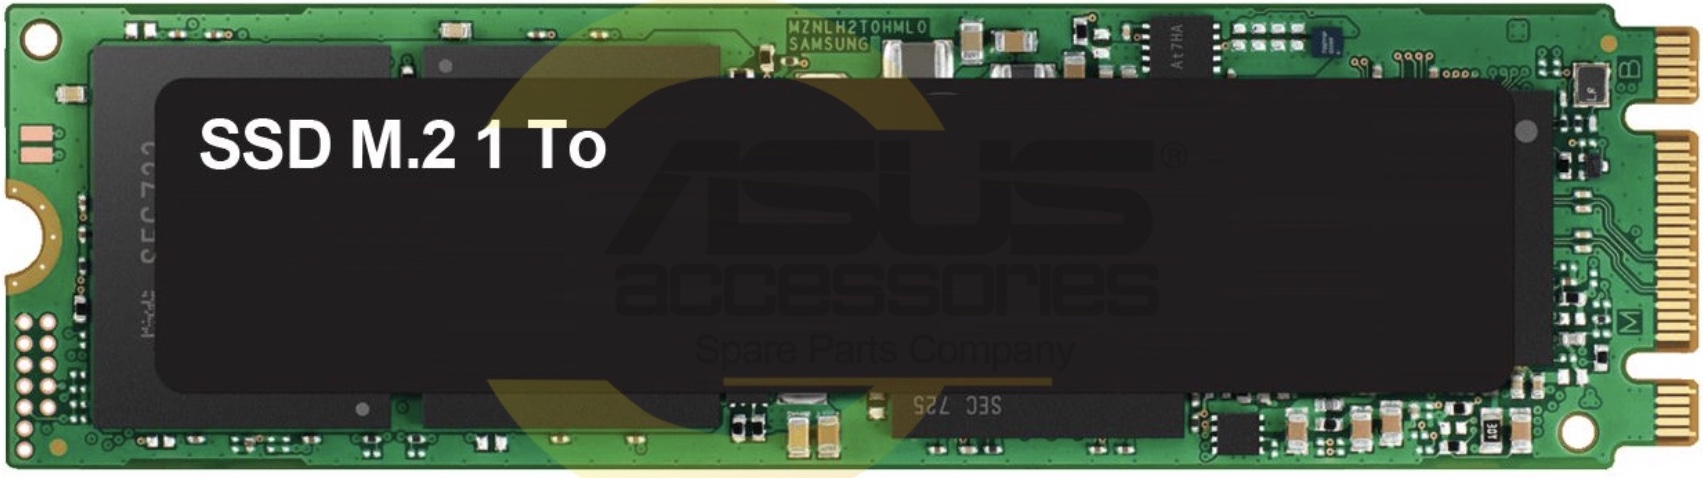 M2 SSD Asus